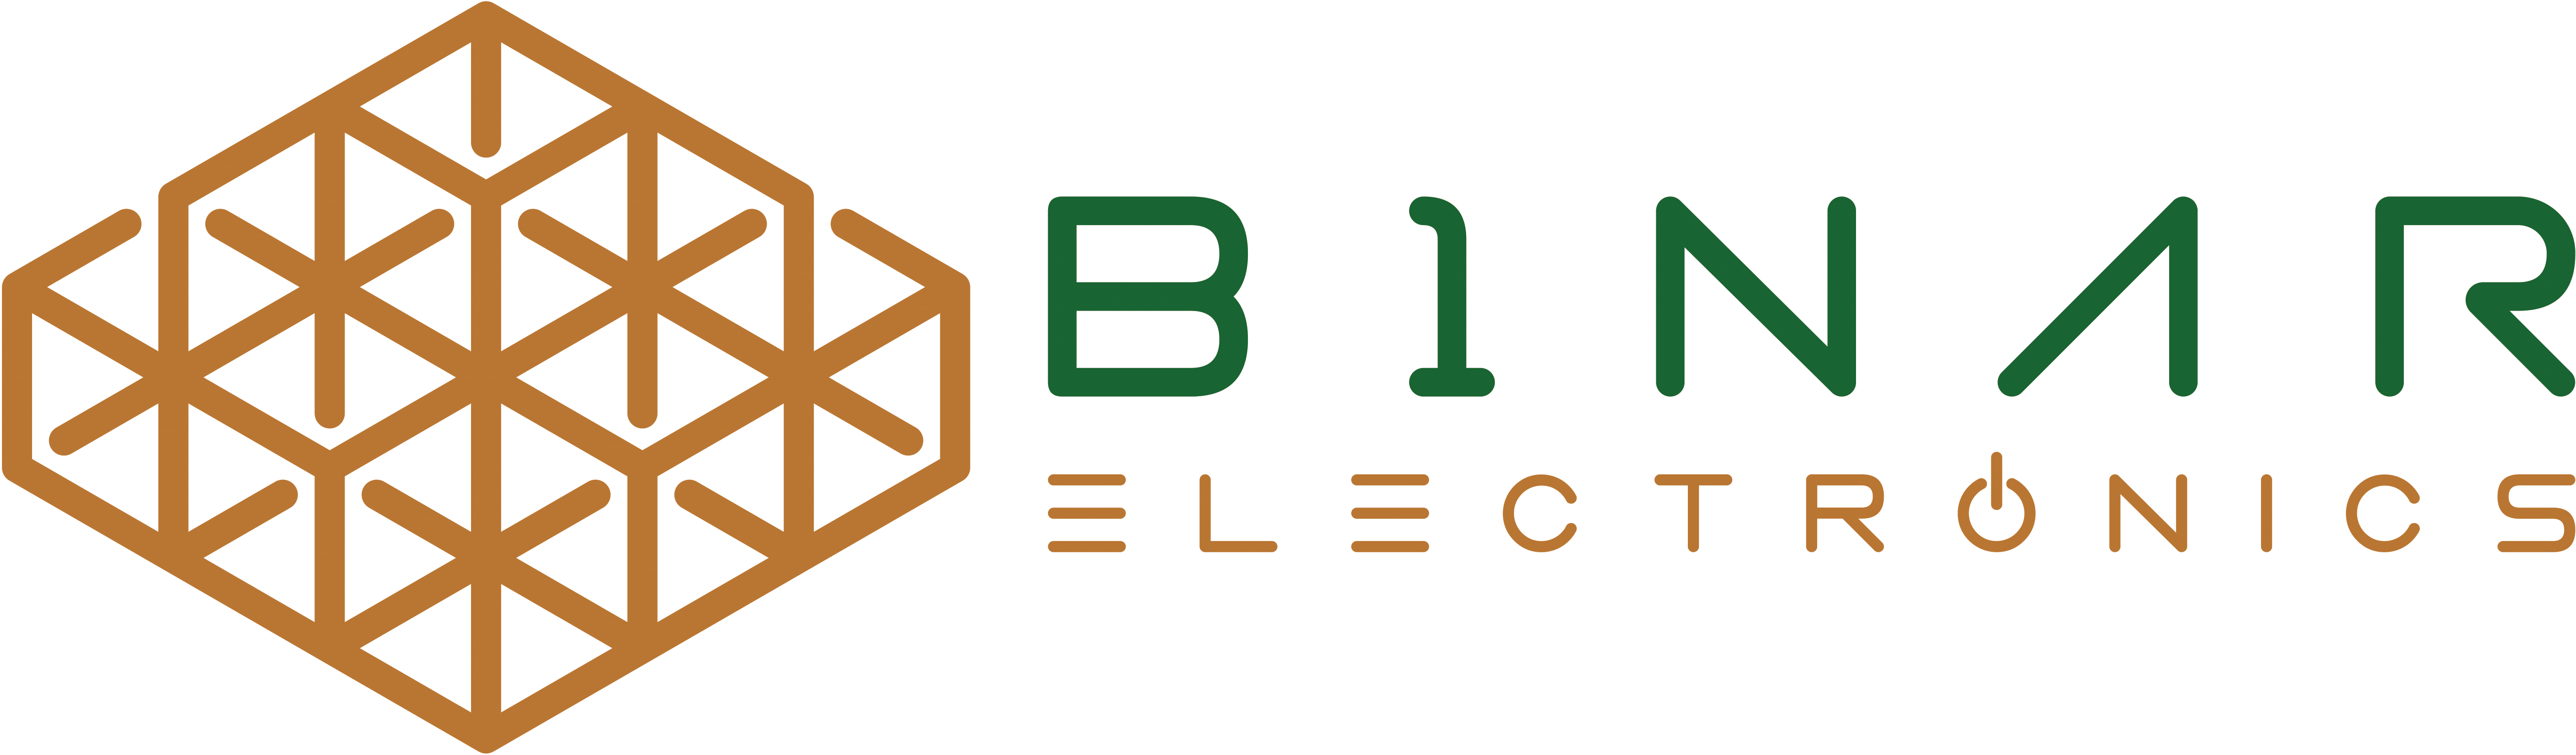 Binar Electronics logo